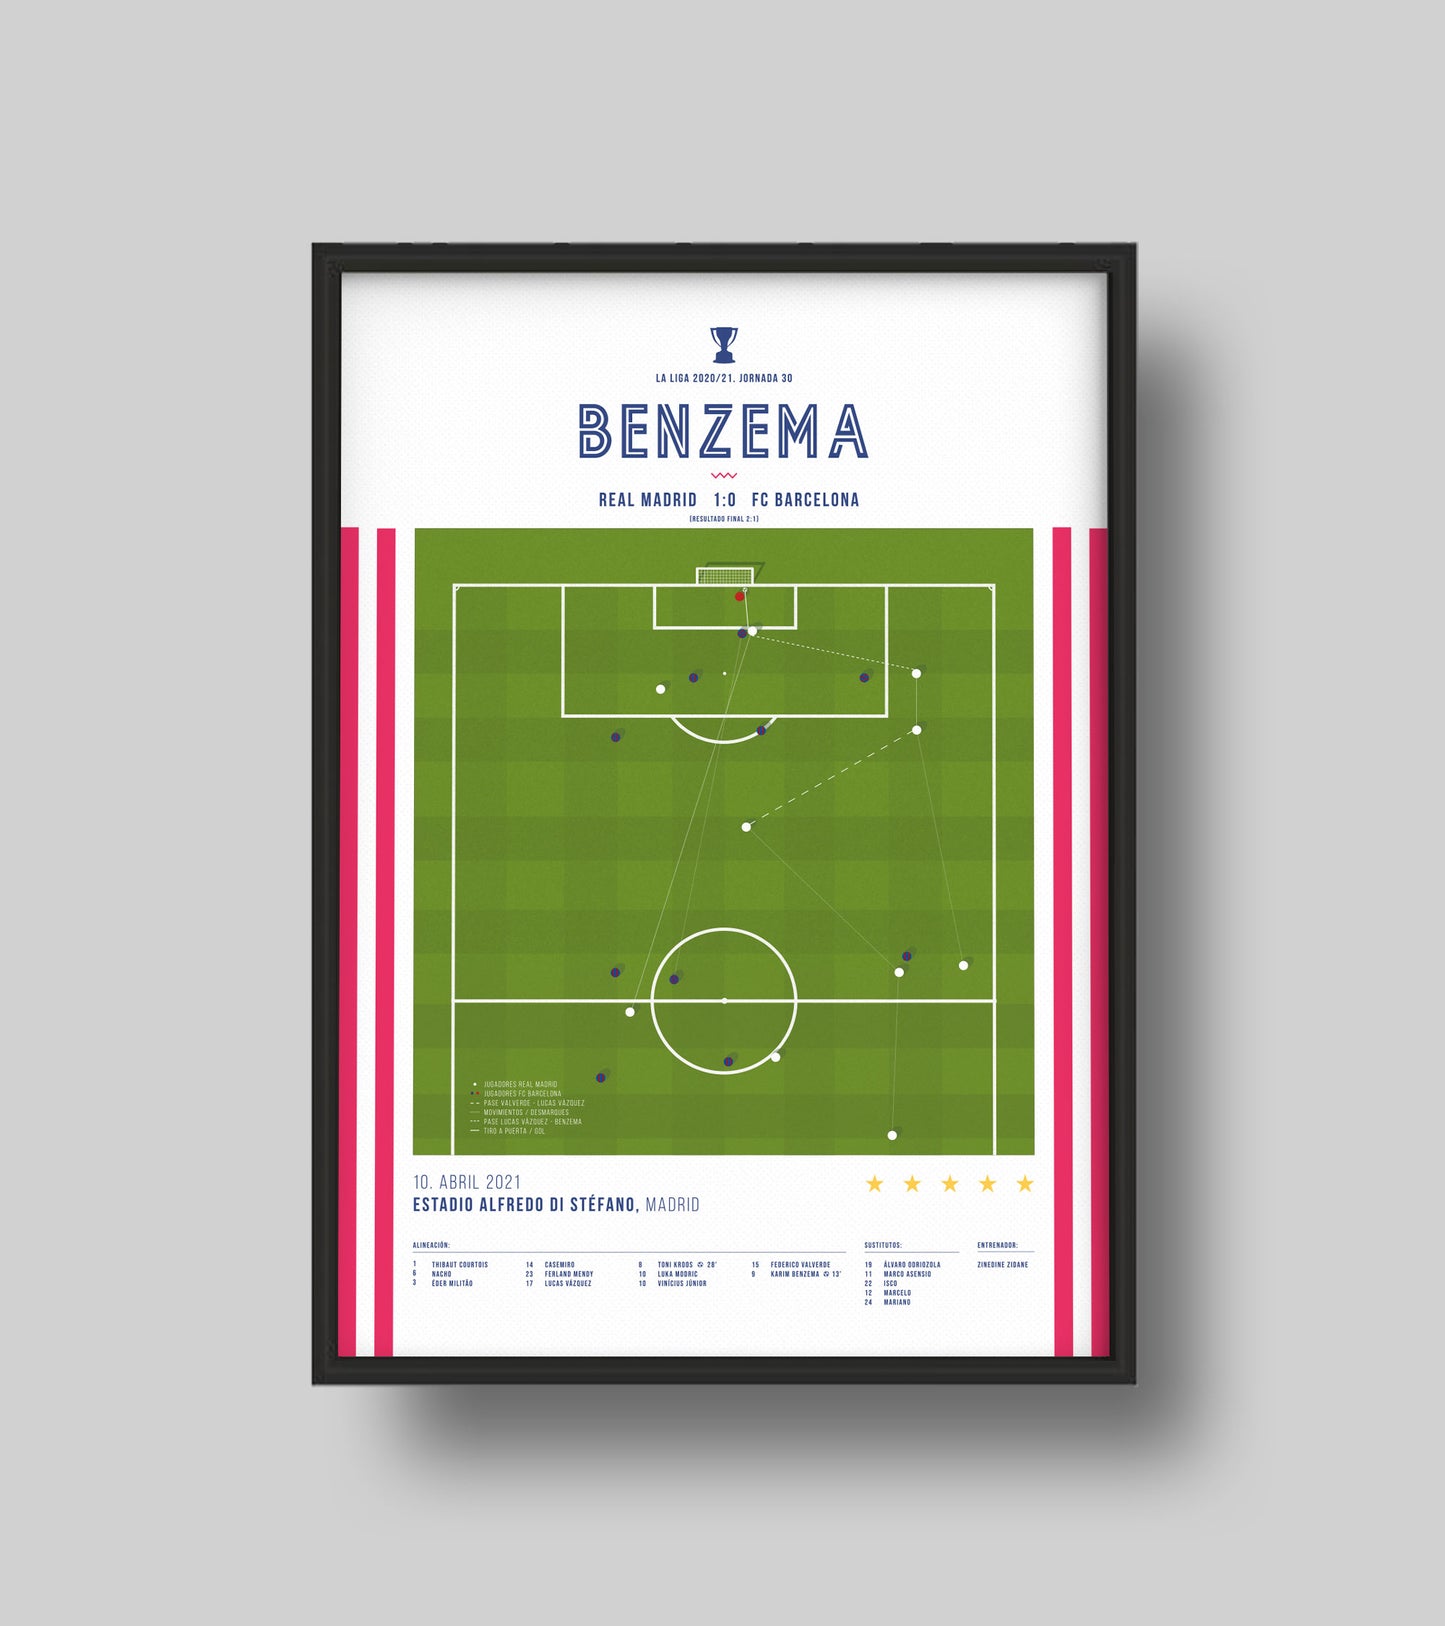 Benzema marque une incroyable talonnade contre Barcelone